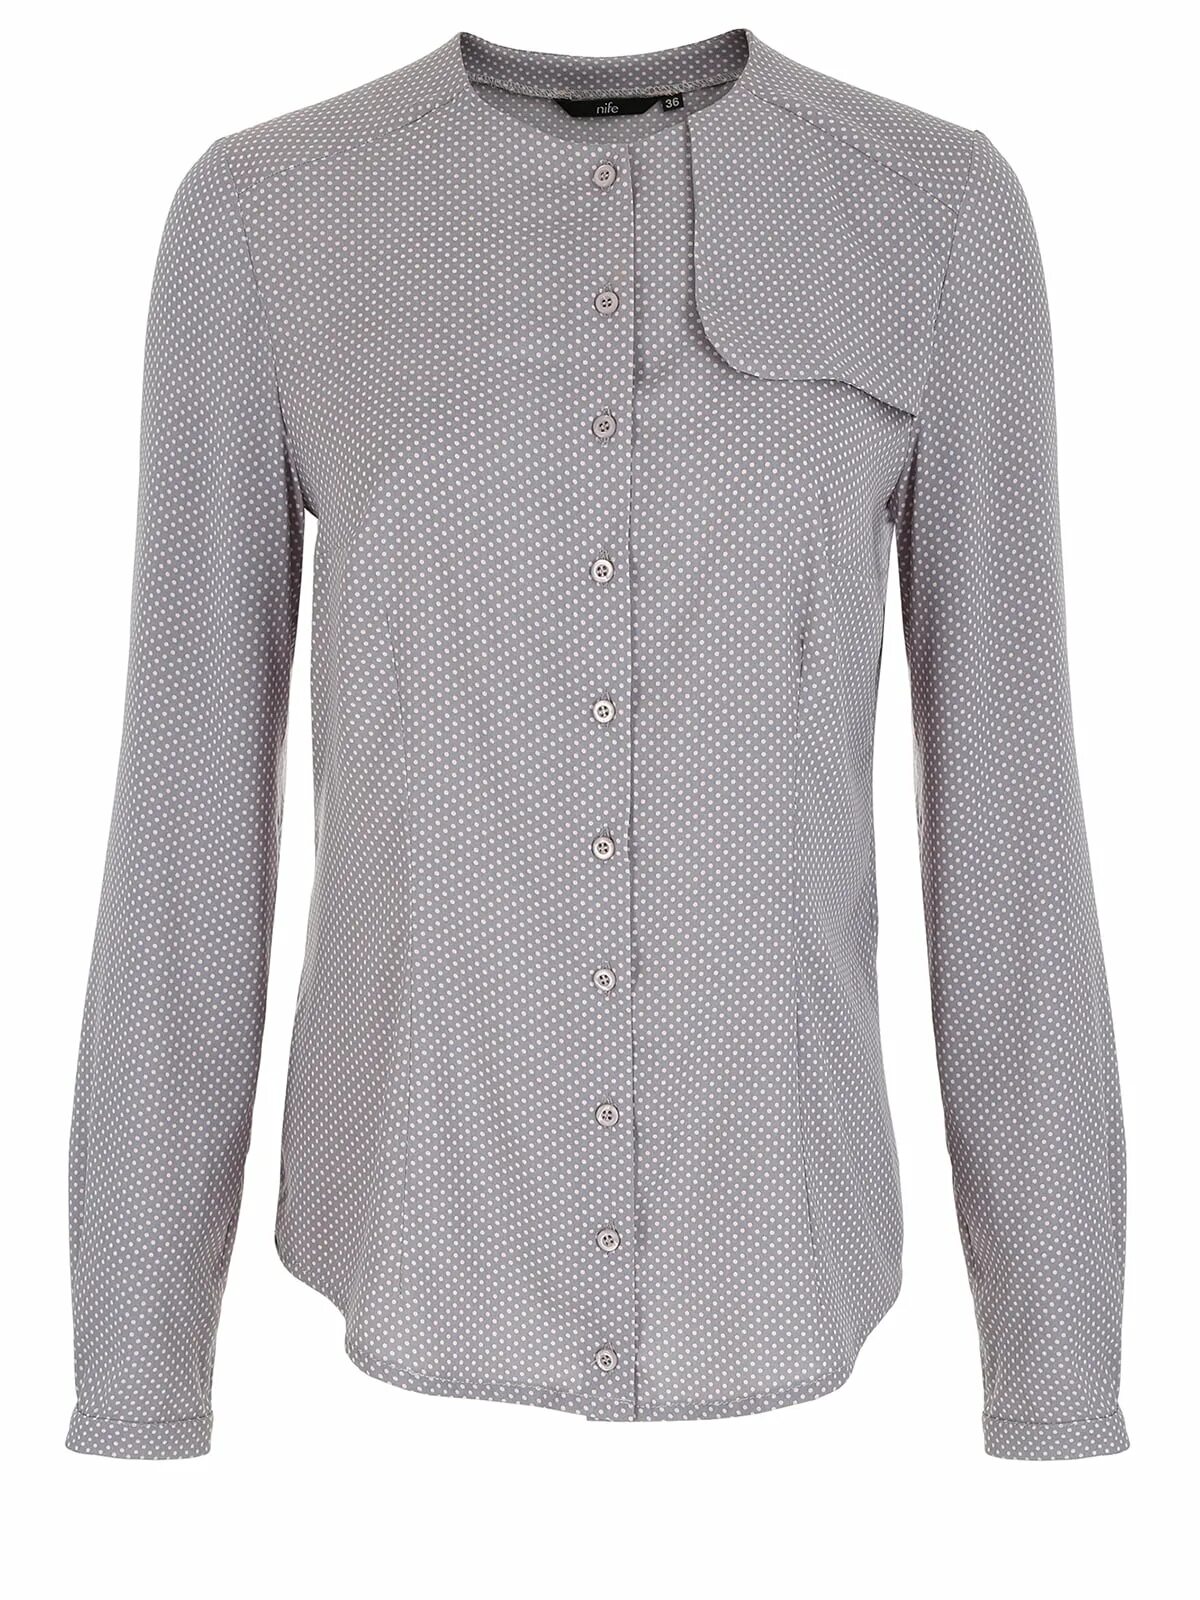 Блузки серого цвета. Блузка Nife b15 серый. Блузка серого цвета. Серо зеленая блузка. Next блузка серого цвета прозрачная.